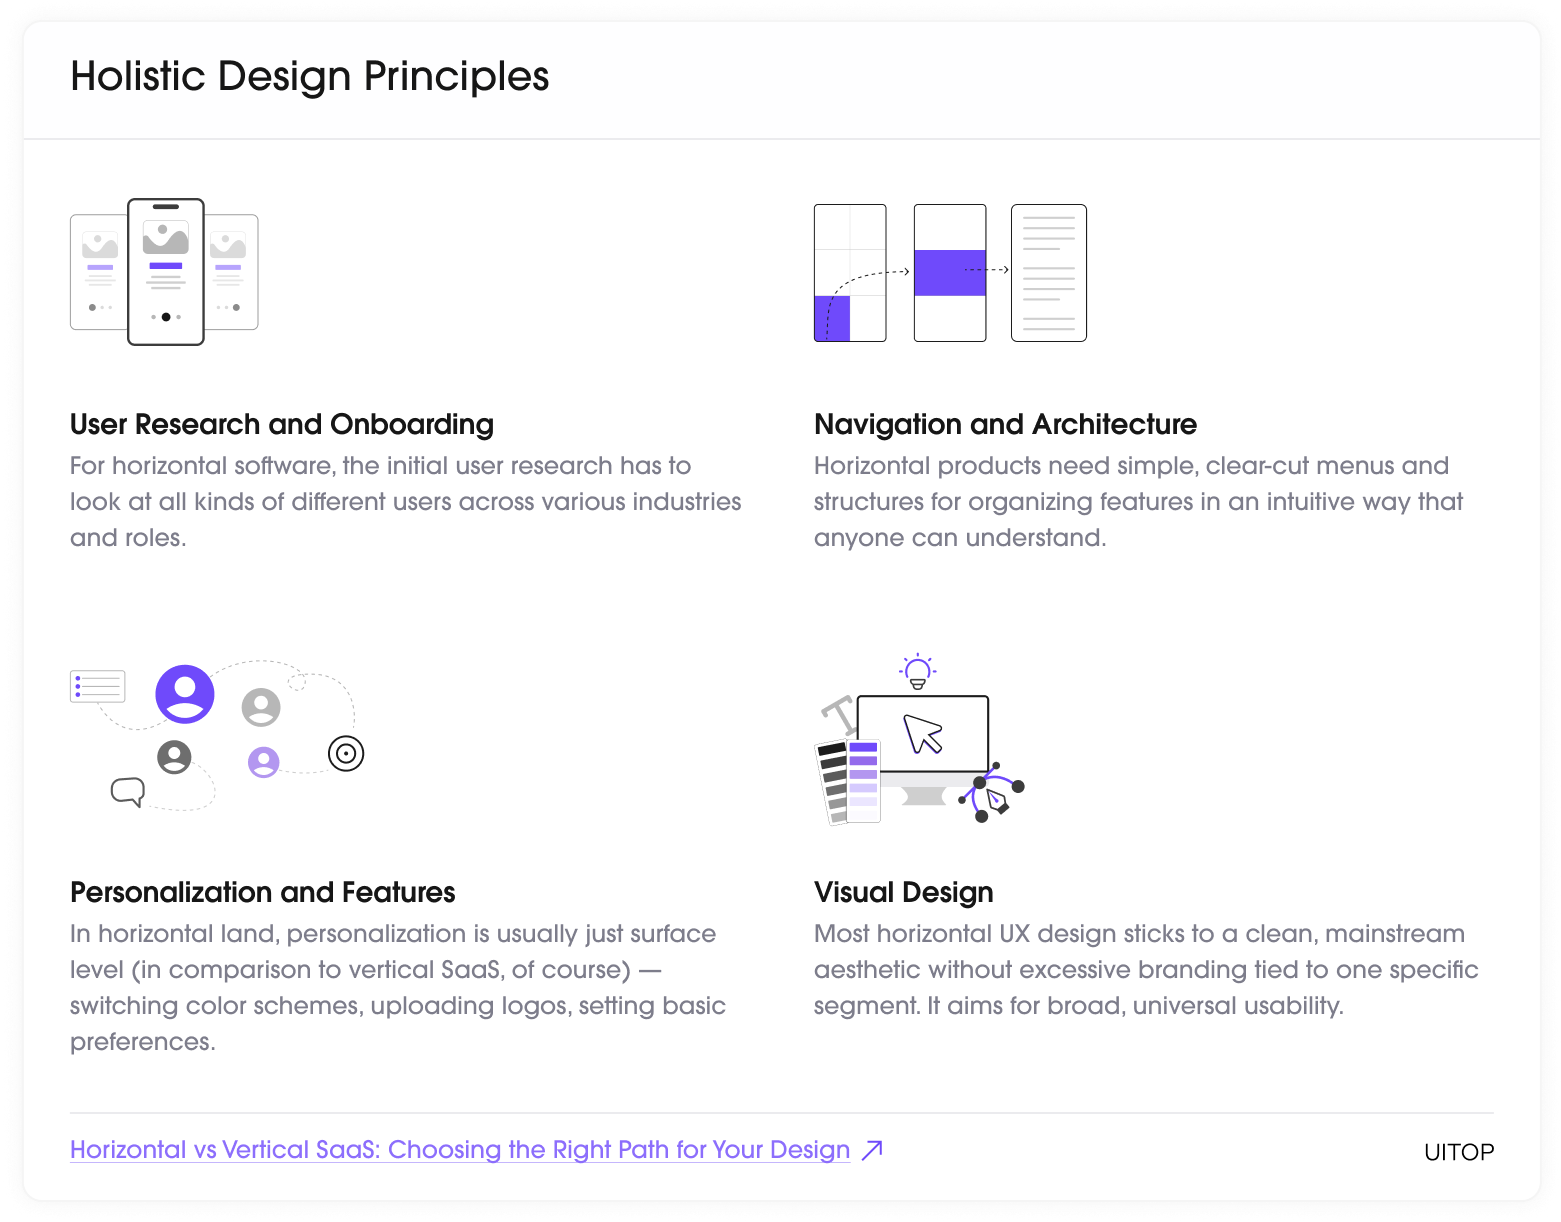 holistic design principles - 1